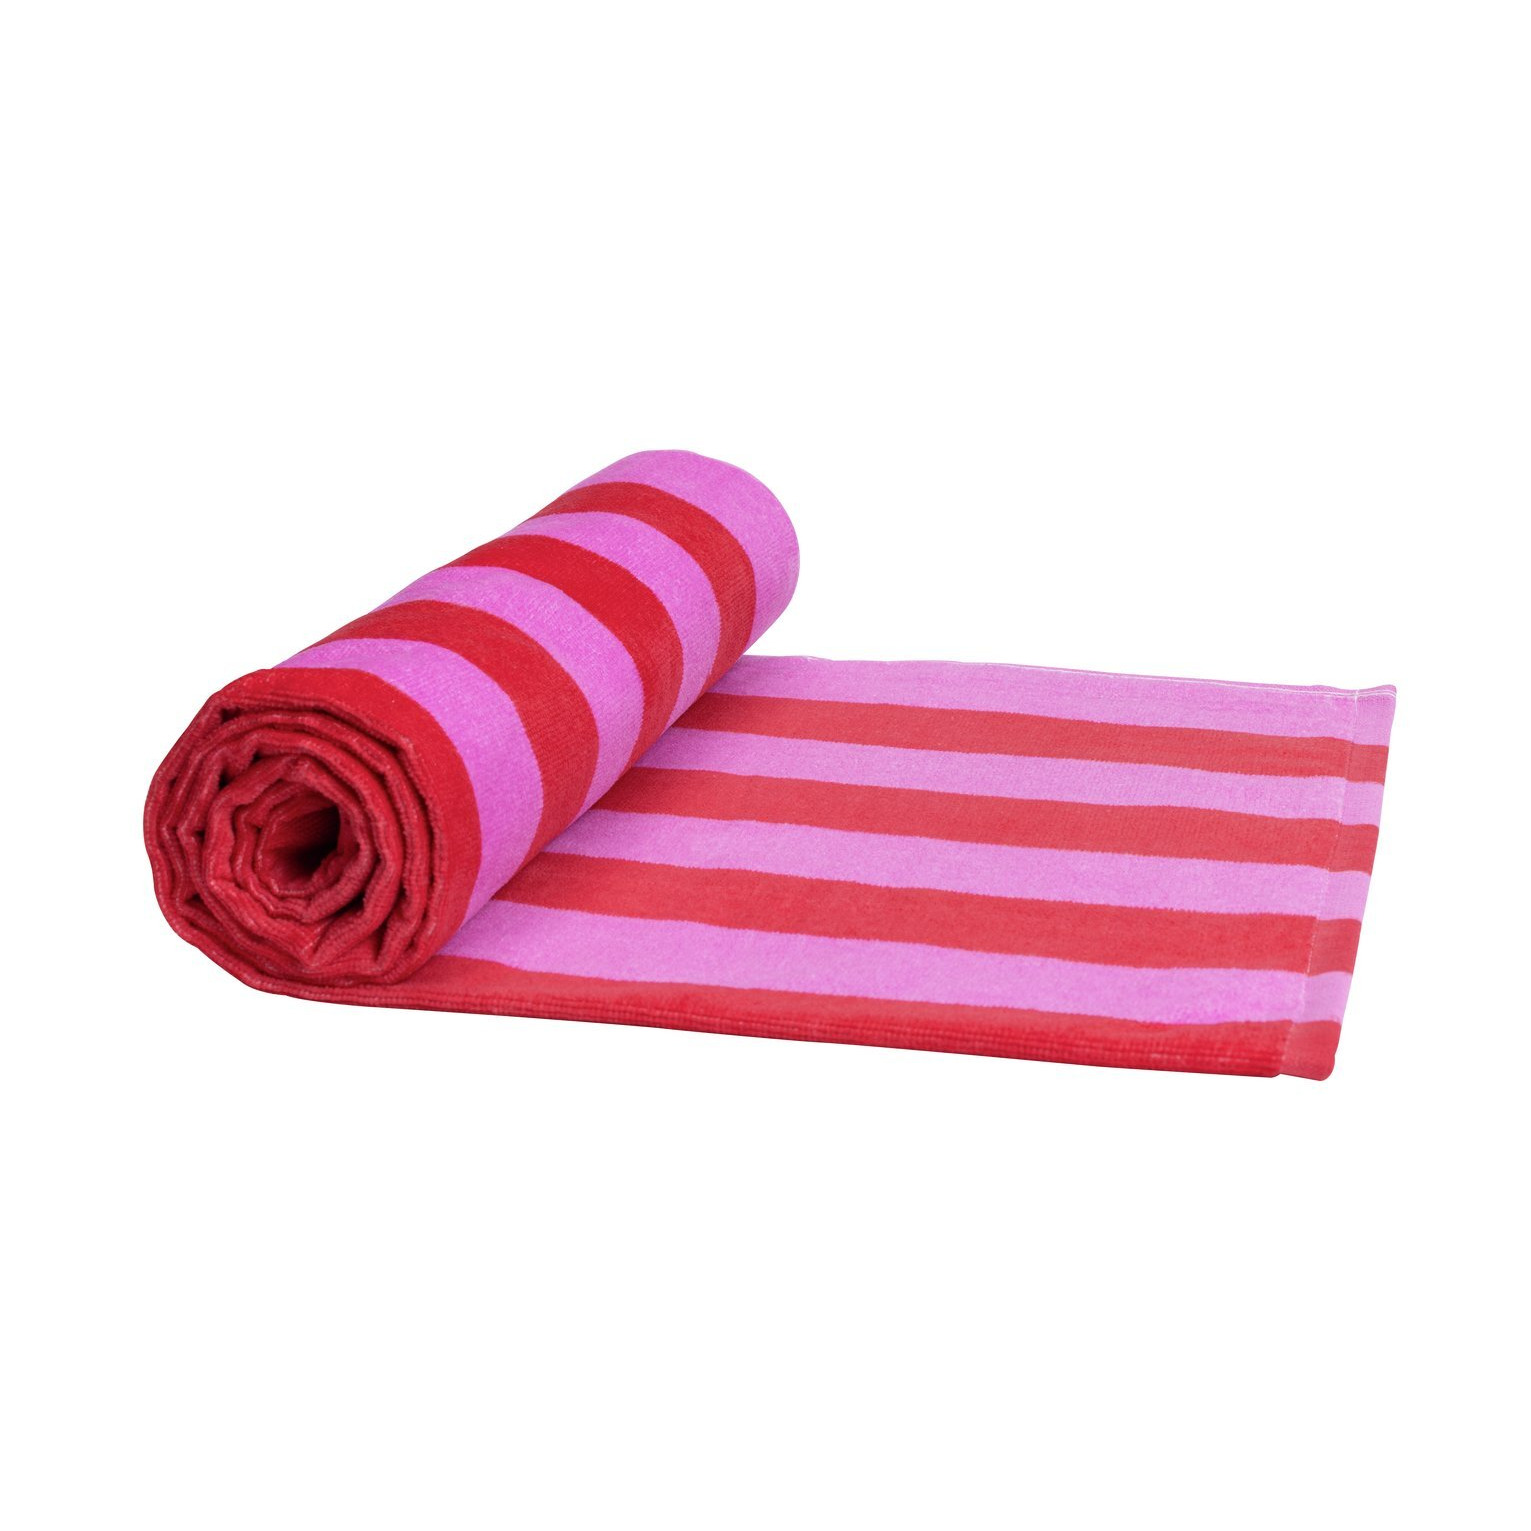 Habitat Stripe Patterned Beach Towel - Pink & Red - image 1